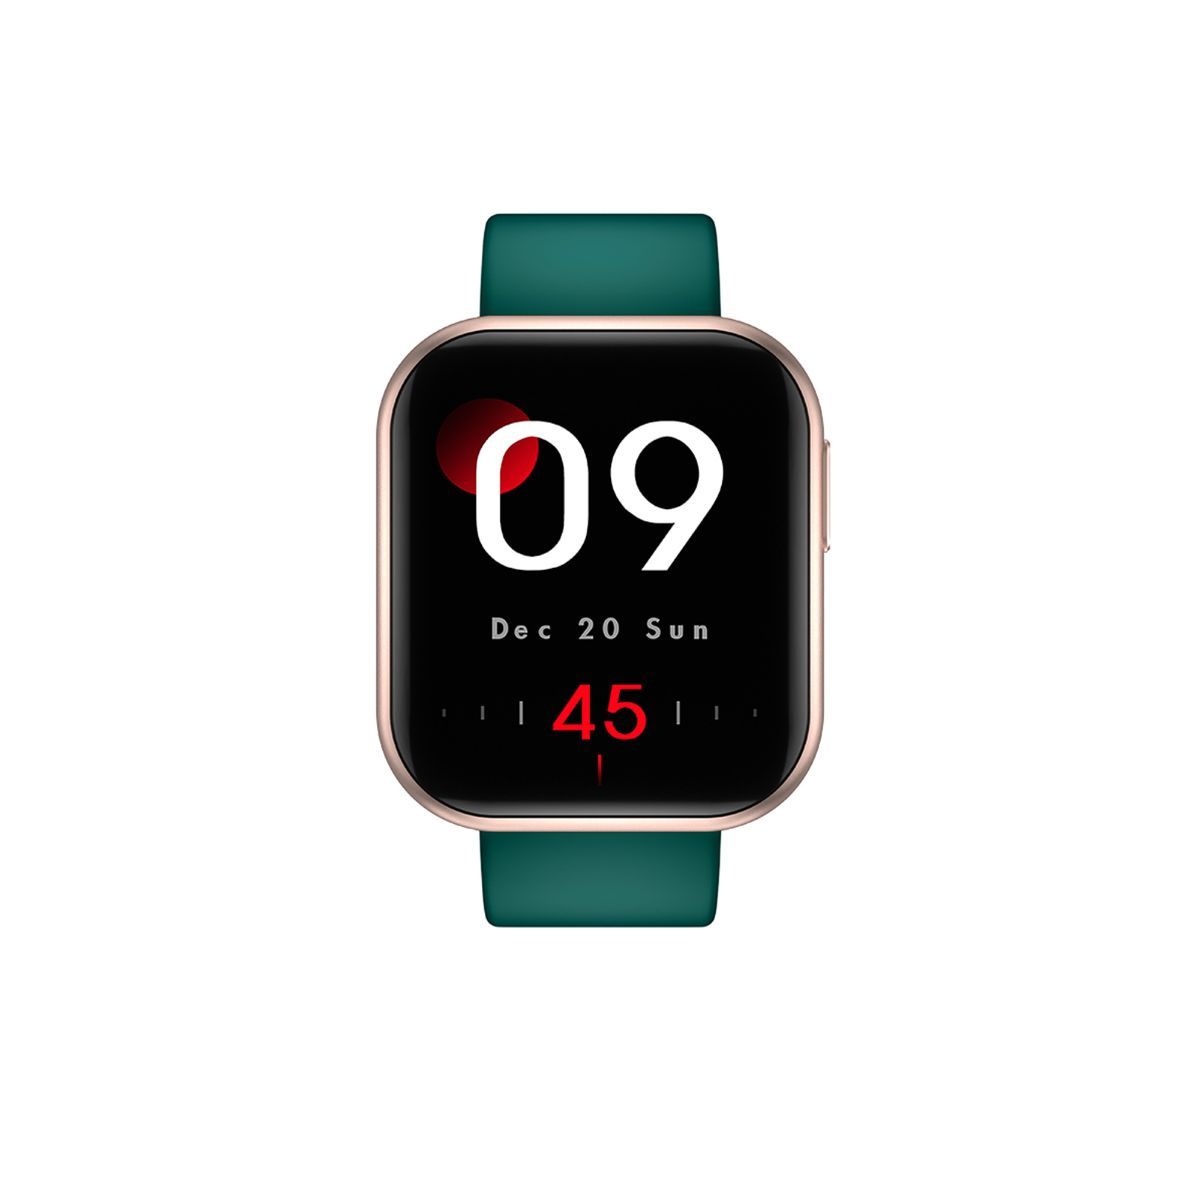 Corseca Just Corseca Snugar Smart Watch with 1.69 inch Large Screen- Green